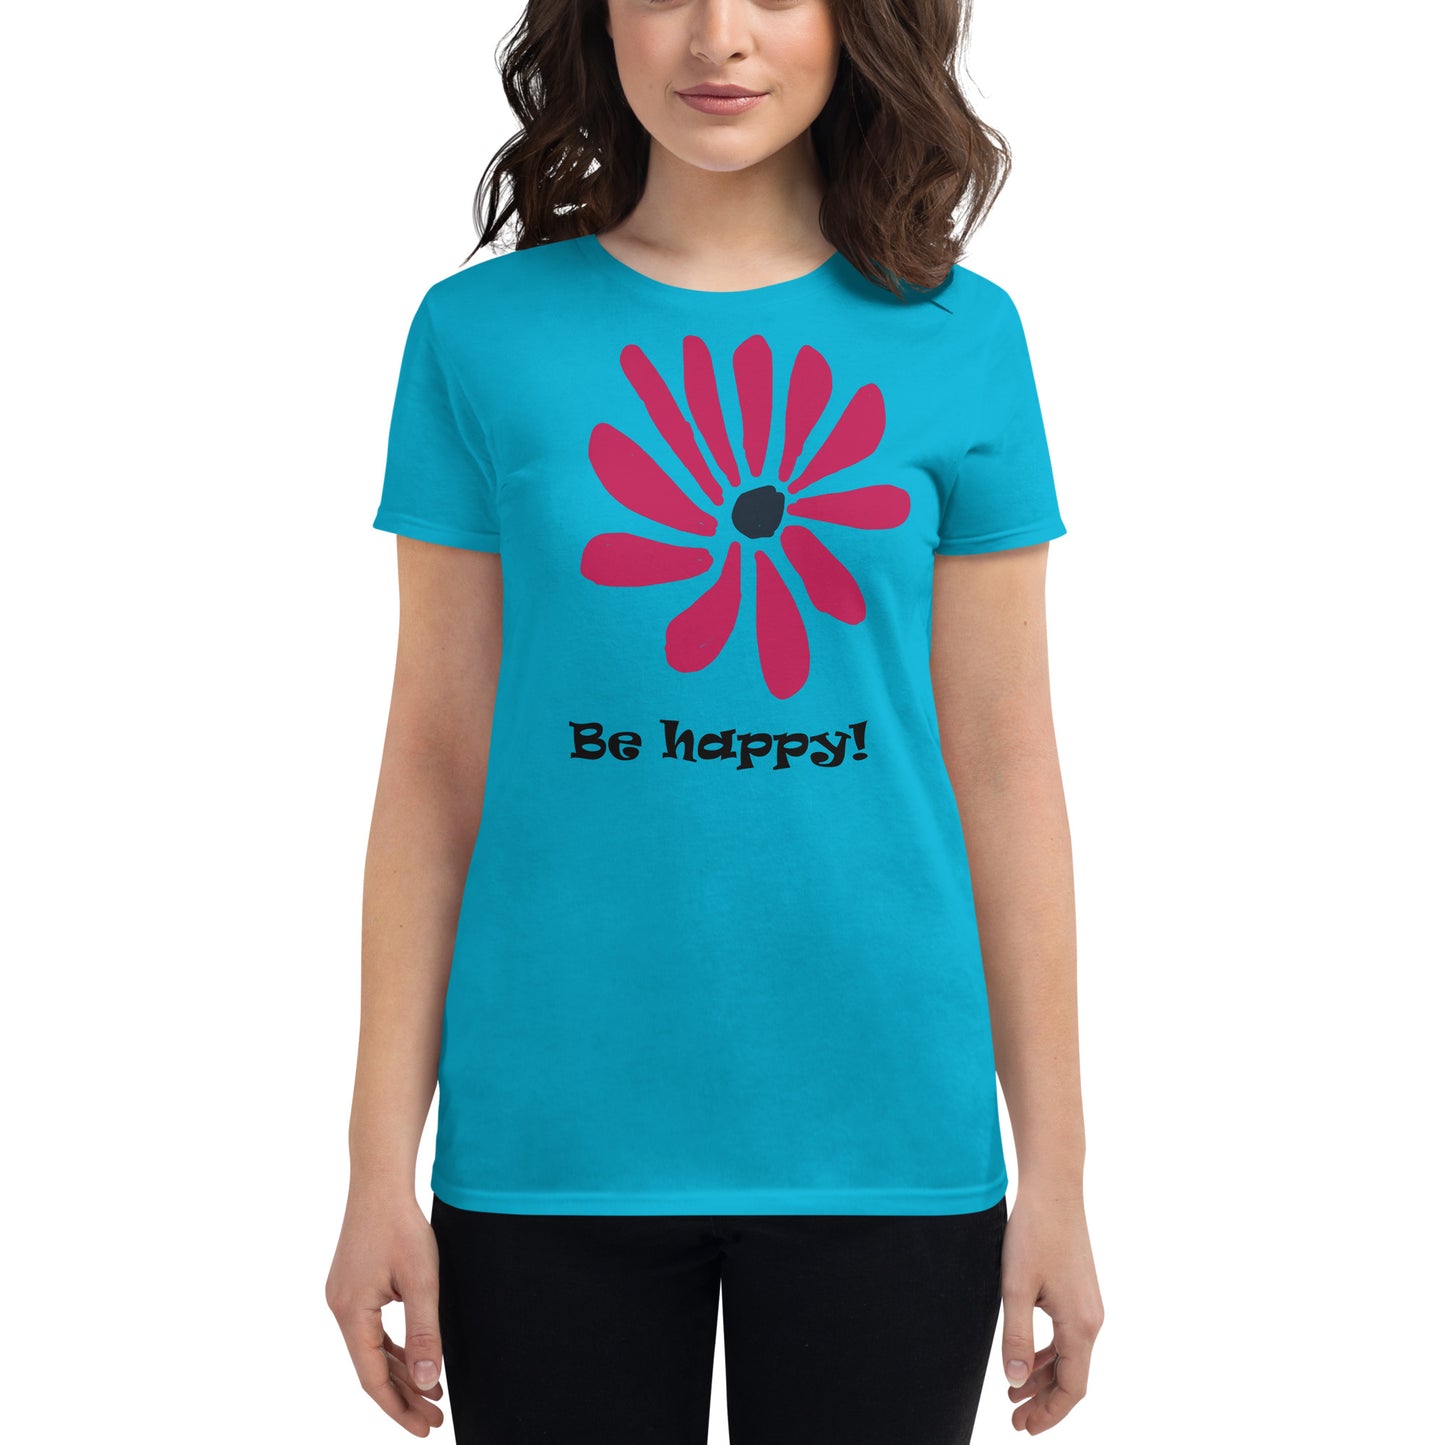 Be happy! Women's short sleeve t-shirt